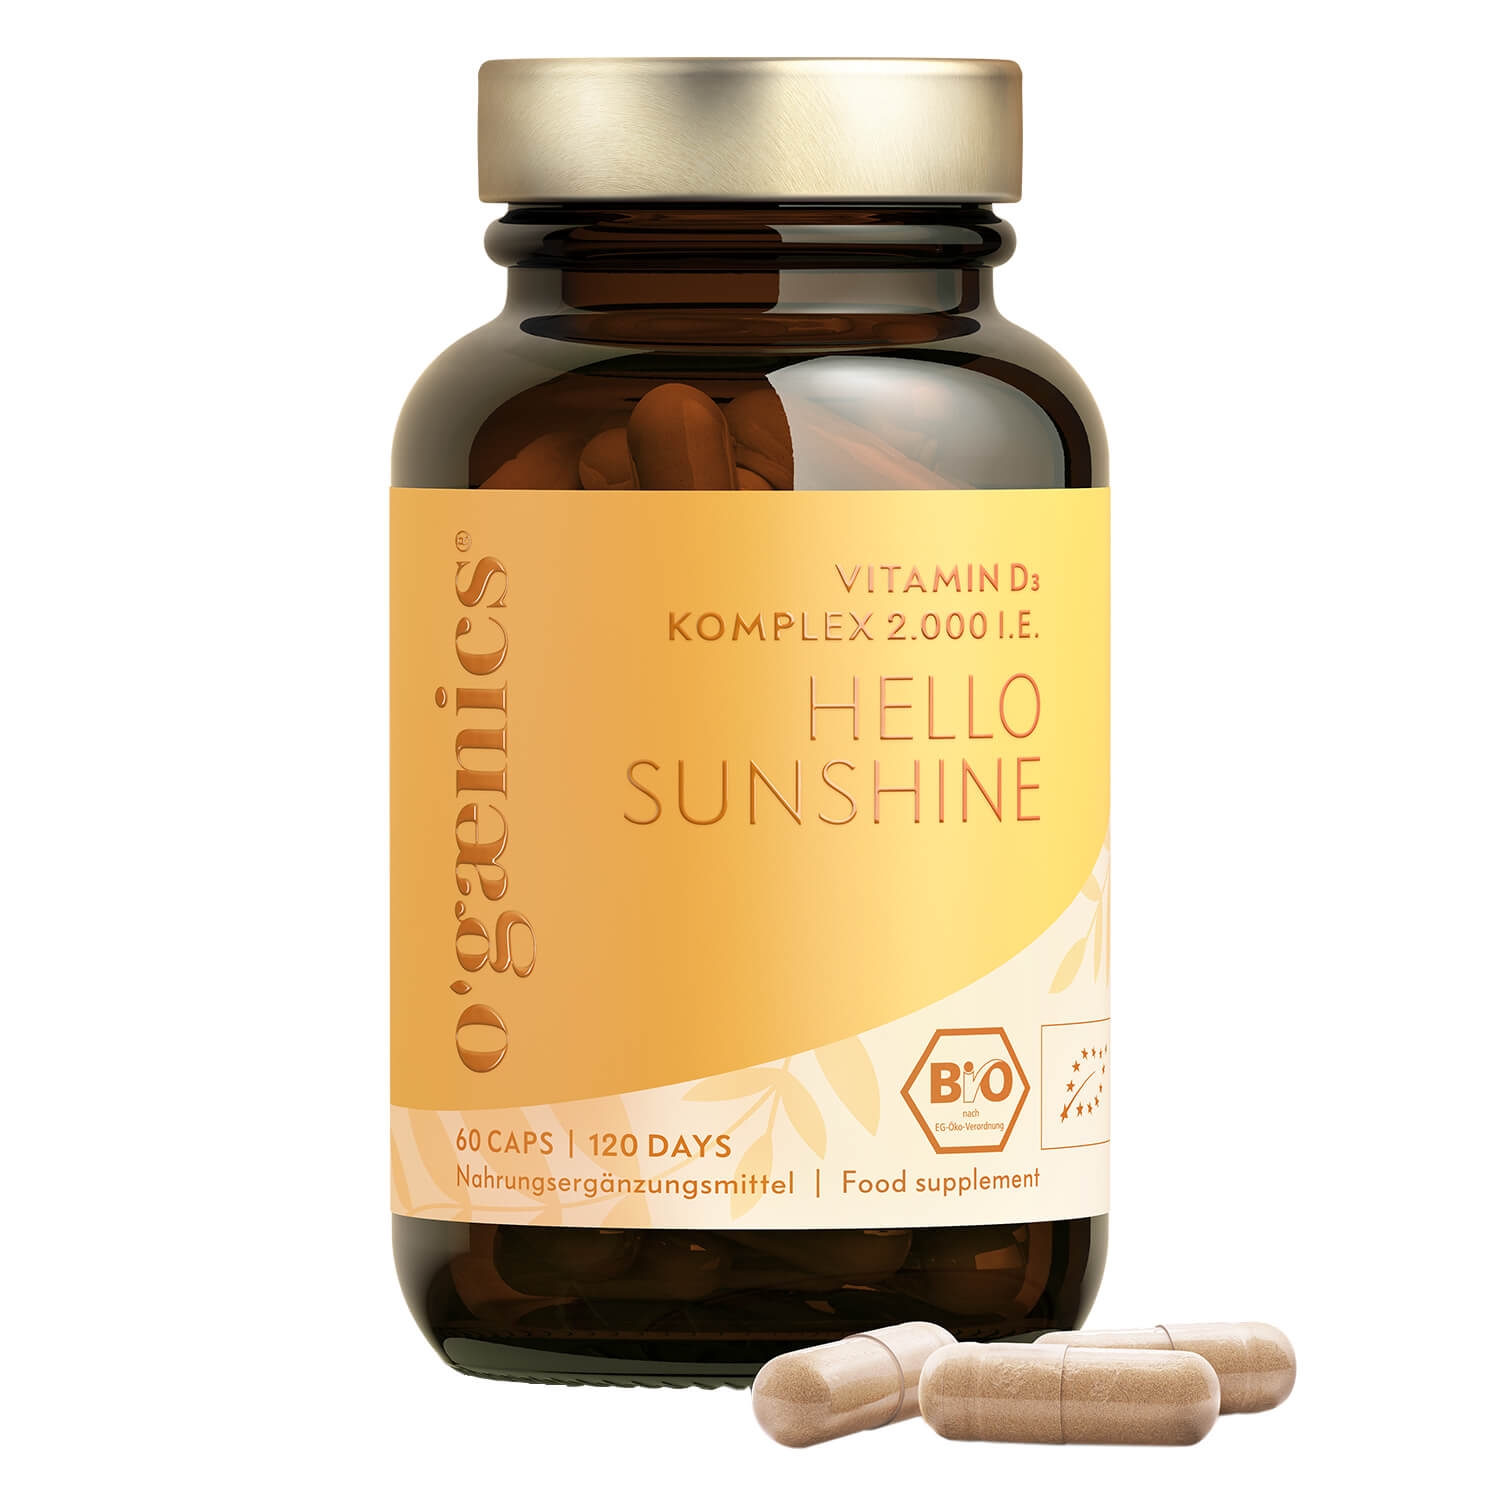 Produktbild von Ogaenics - Hello Sunshine Vitamin D₃ Complex